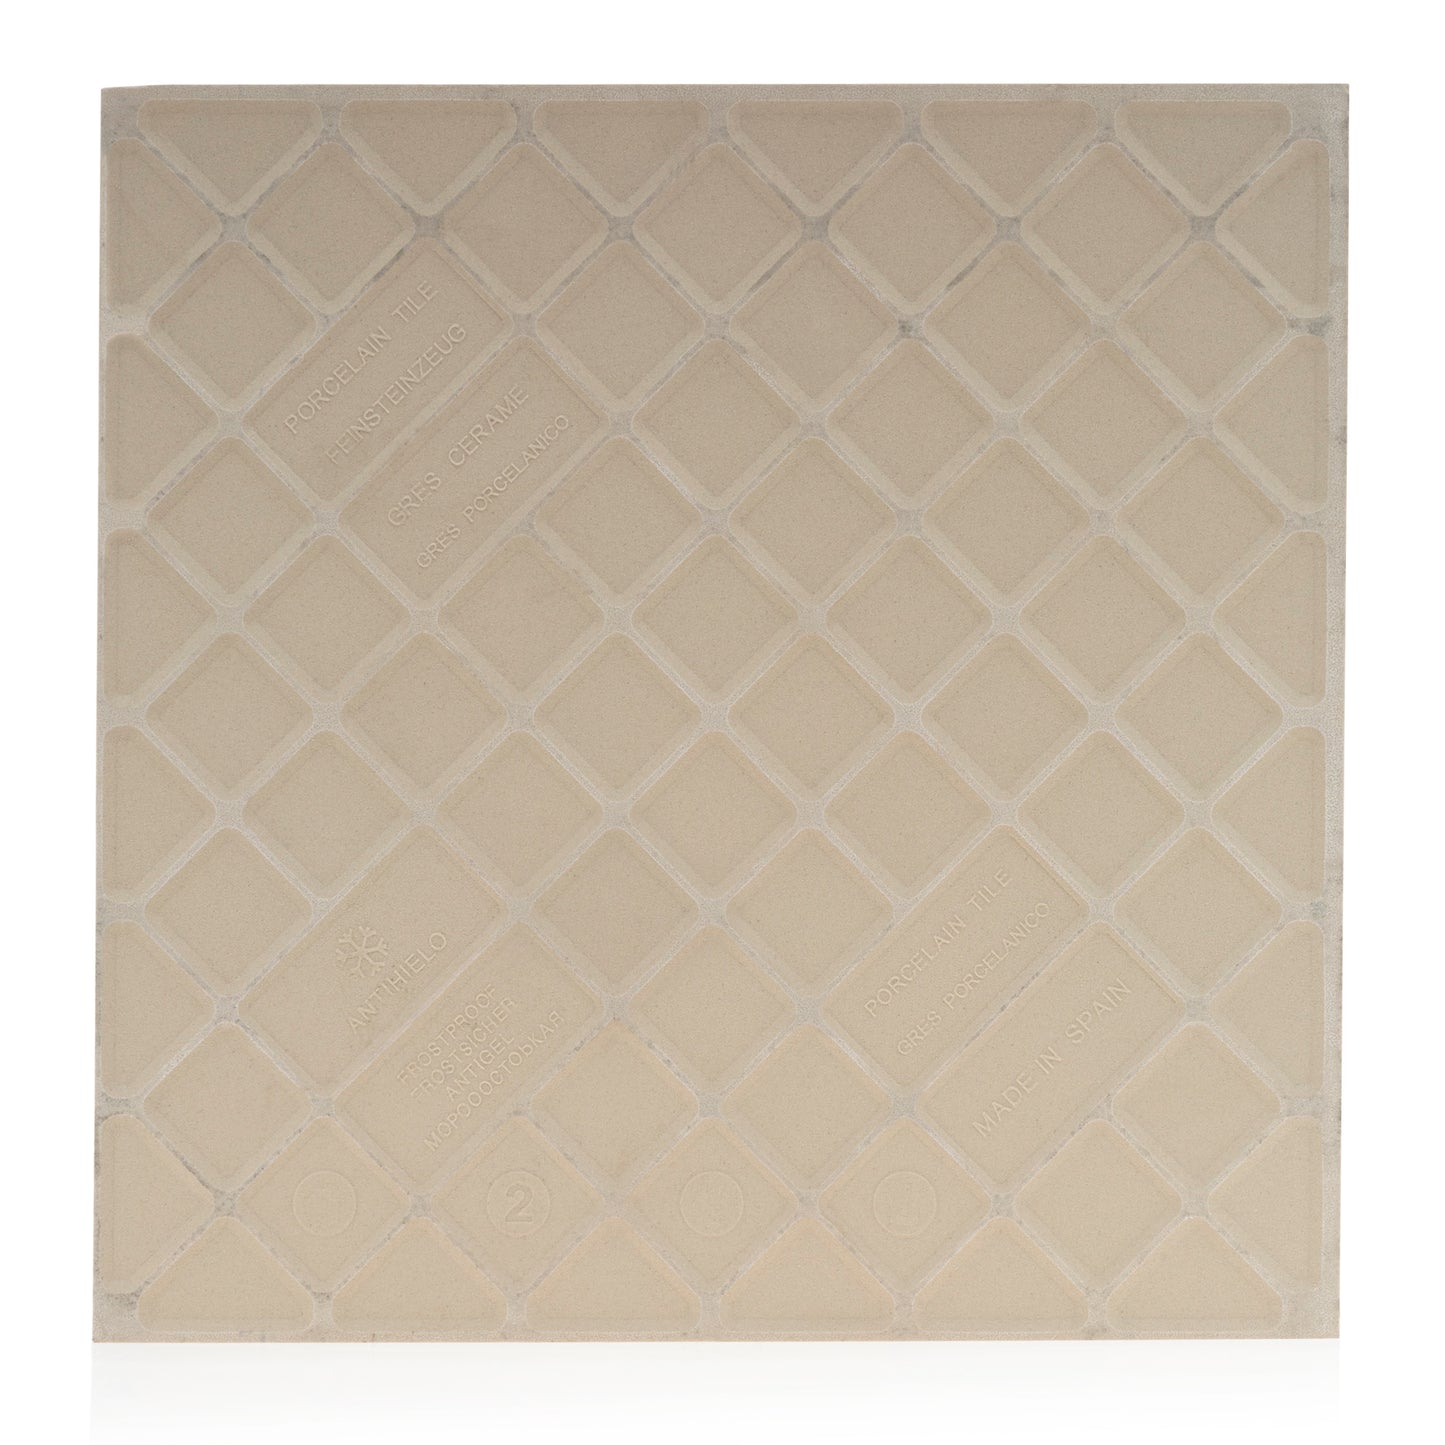 11.71x11.71  Encaustic Beige Porcelain tile - Industry Tile